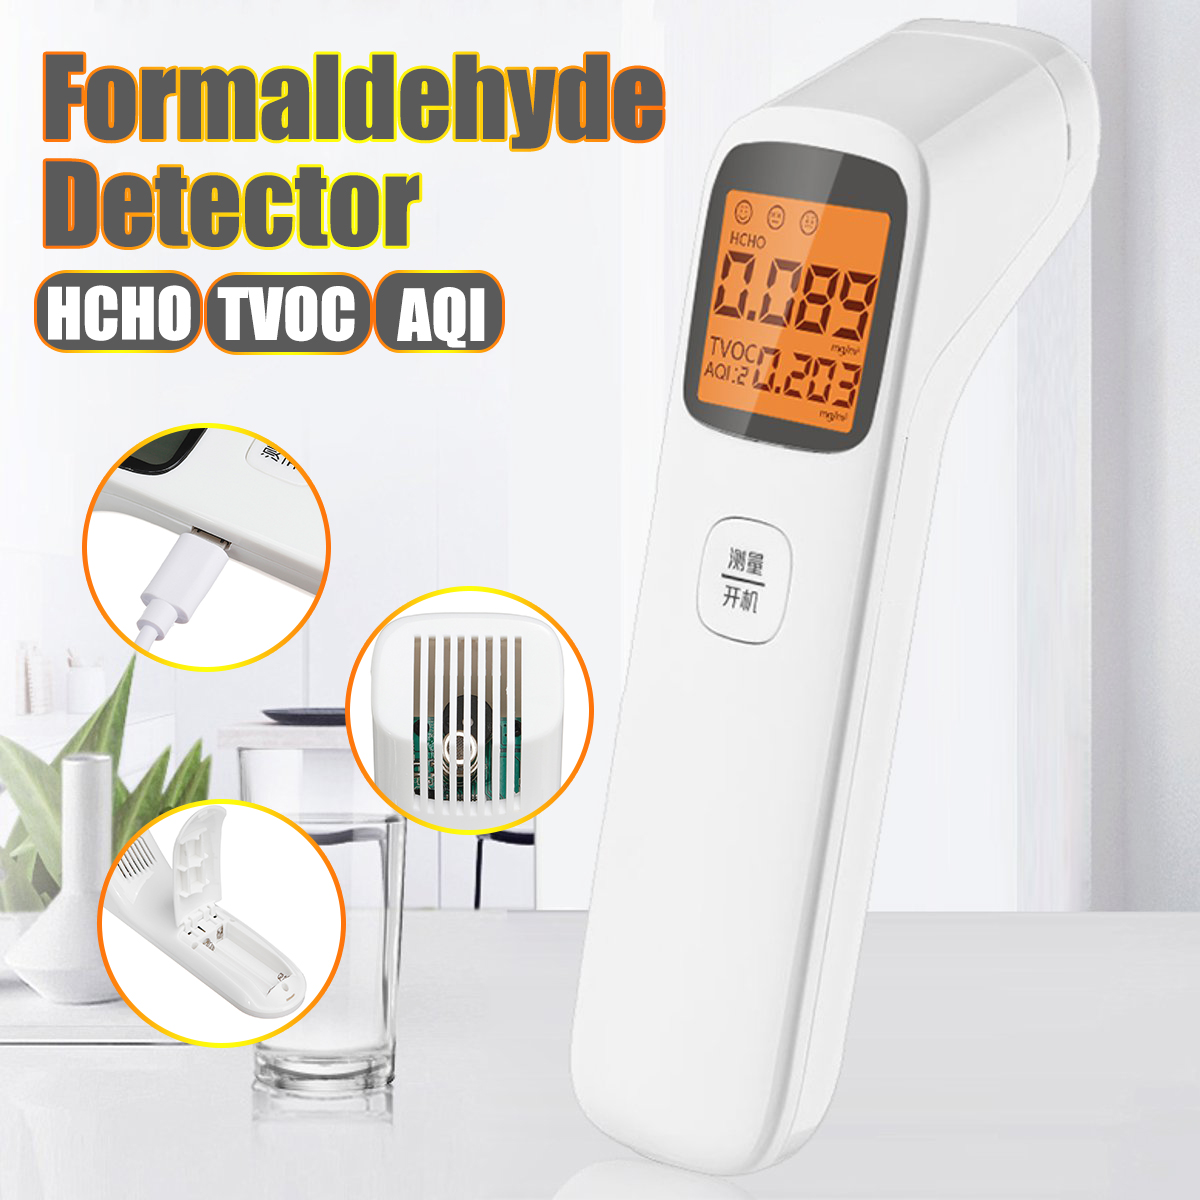 Smart-Air-Formaldehyde-Gas-Detector-Monitors-Tester-For-HCHOTVOCAQI-Detection-1468235-1